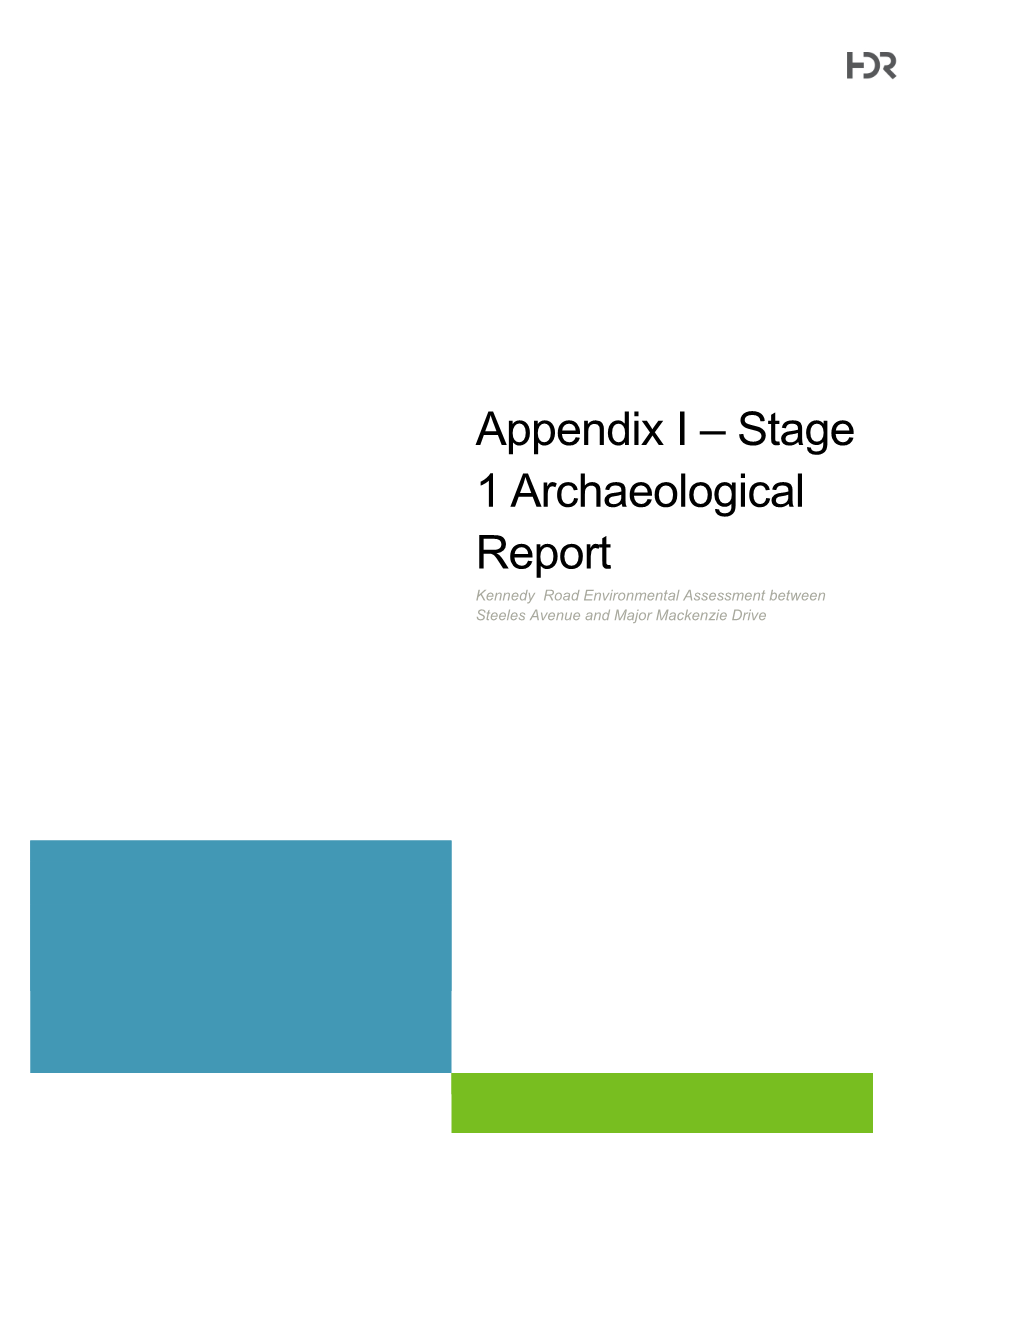 Appendix I Stage 1 AA Report